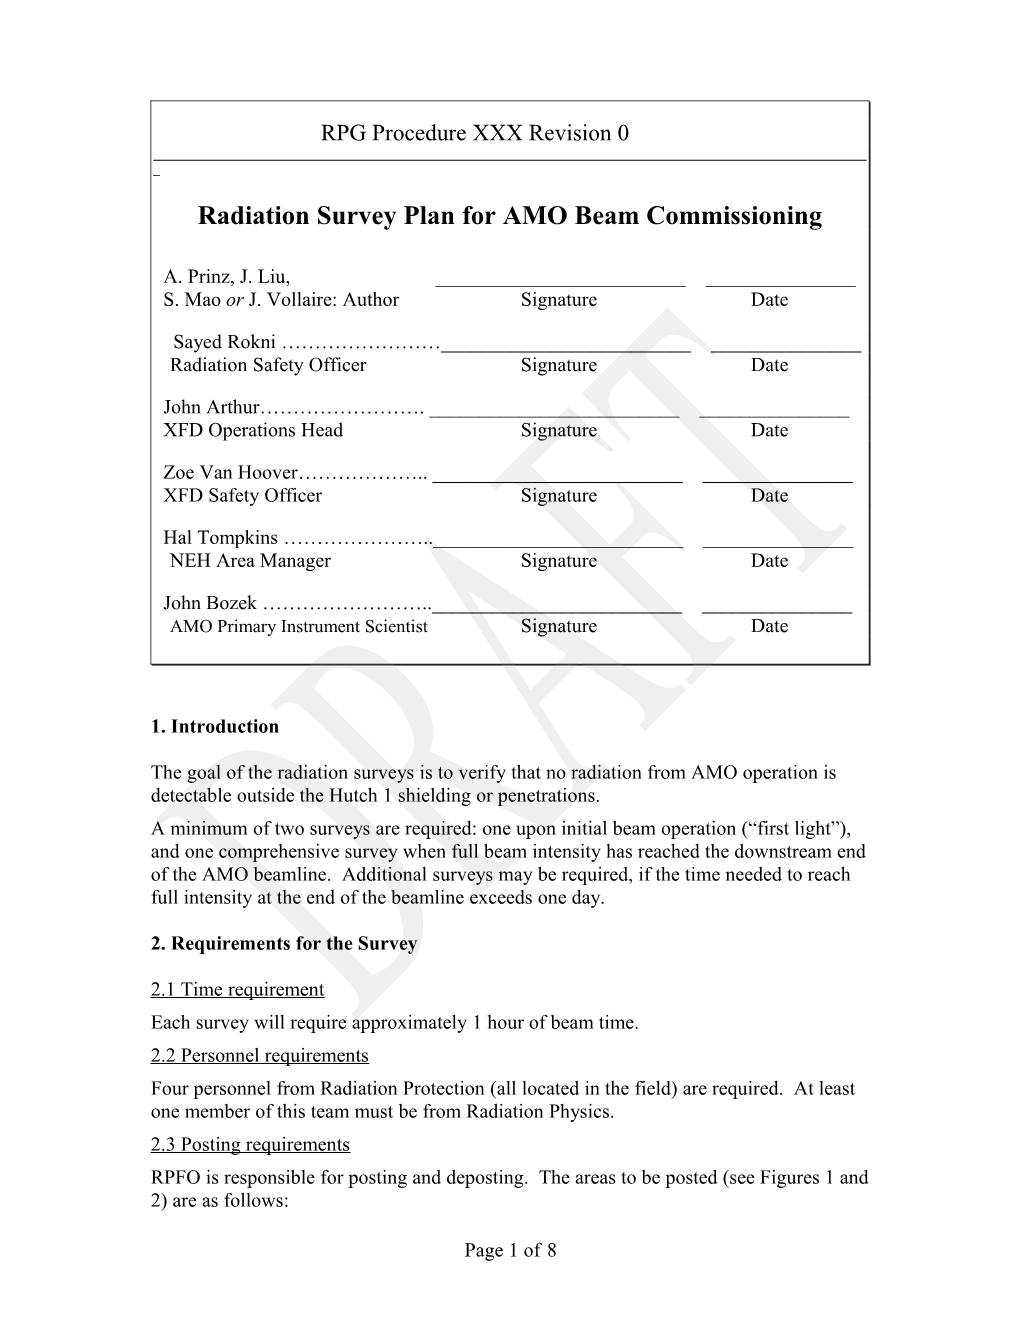 Radiation Survey Plan for AMO Beam Commissioning